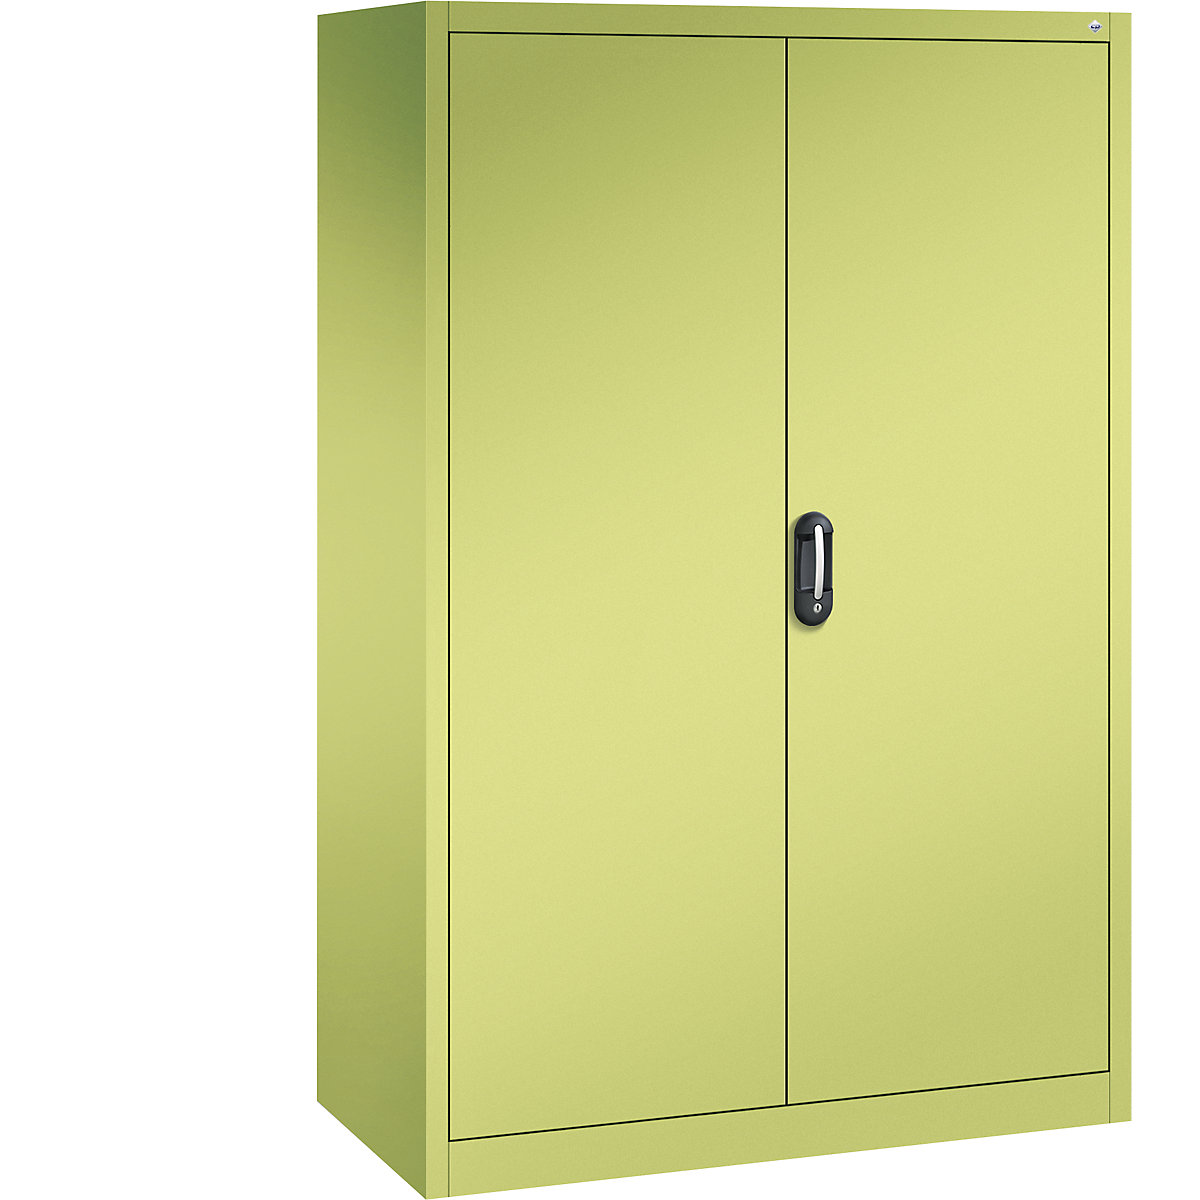 ACURADO universal cupboard – C+P, WxD 1200 x 600 mm, viridian green / viridian green-9